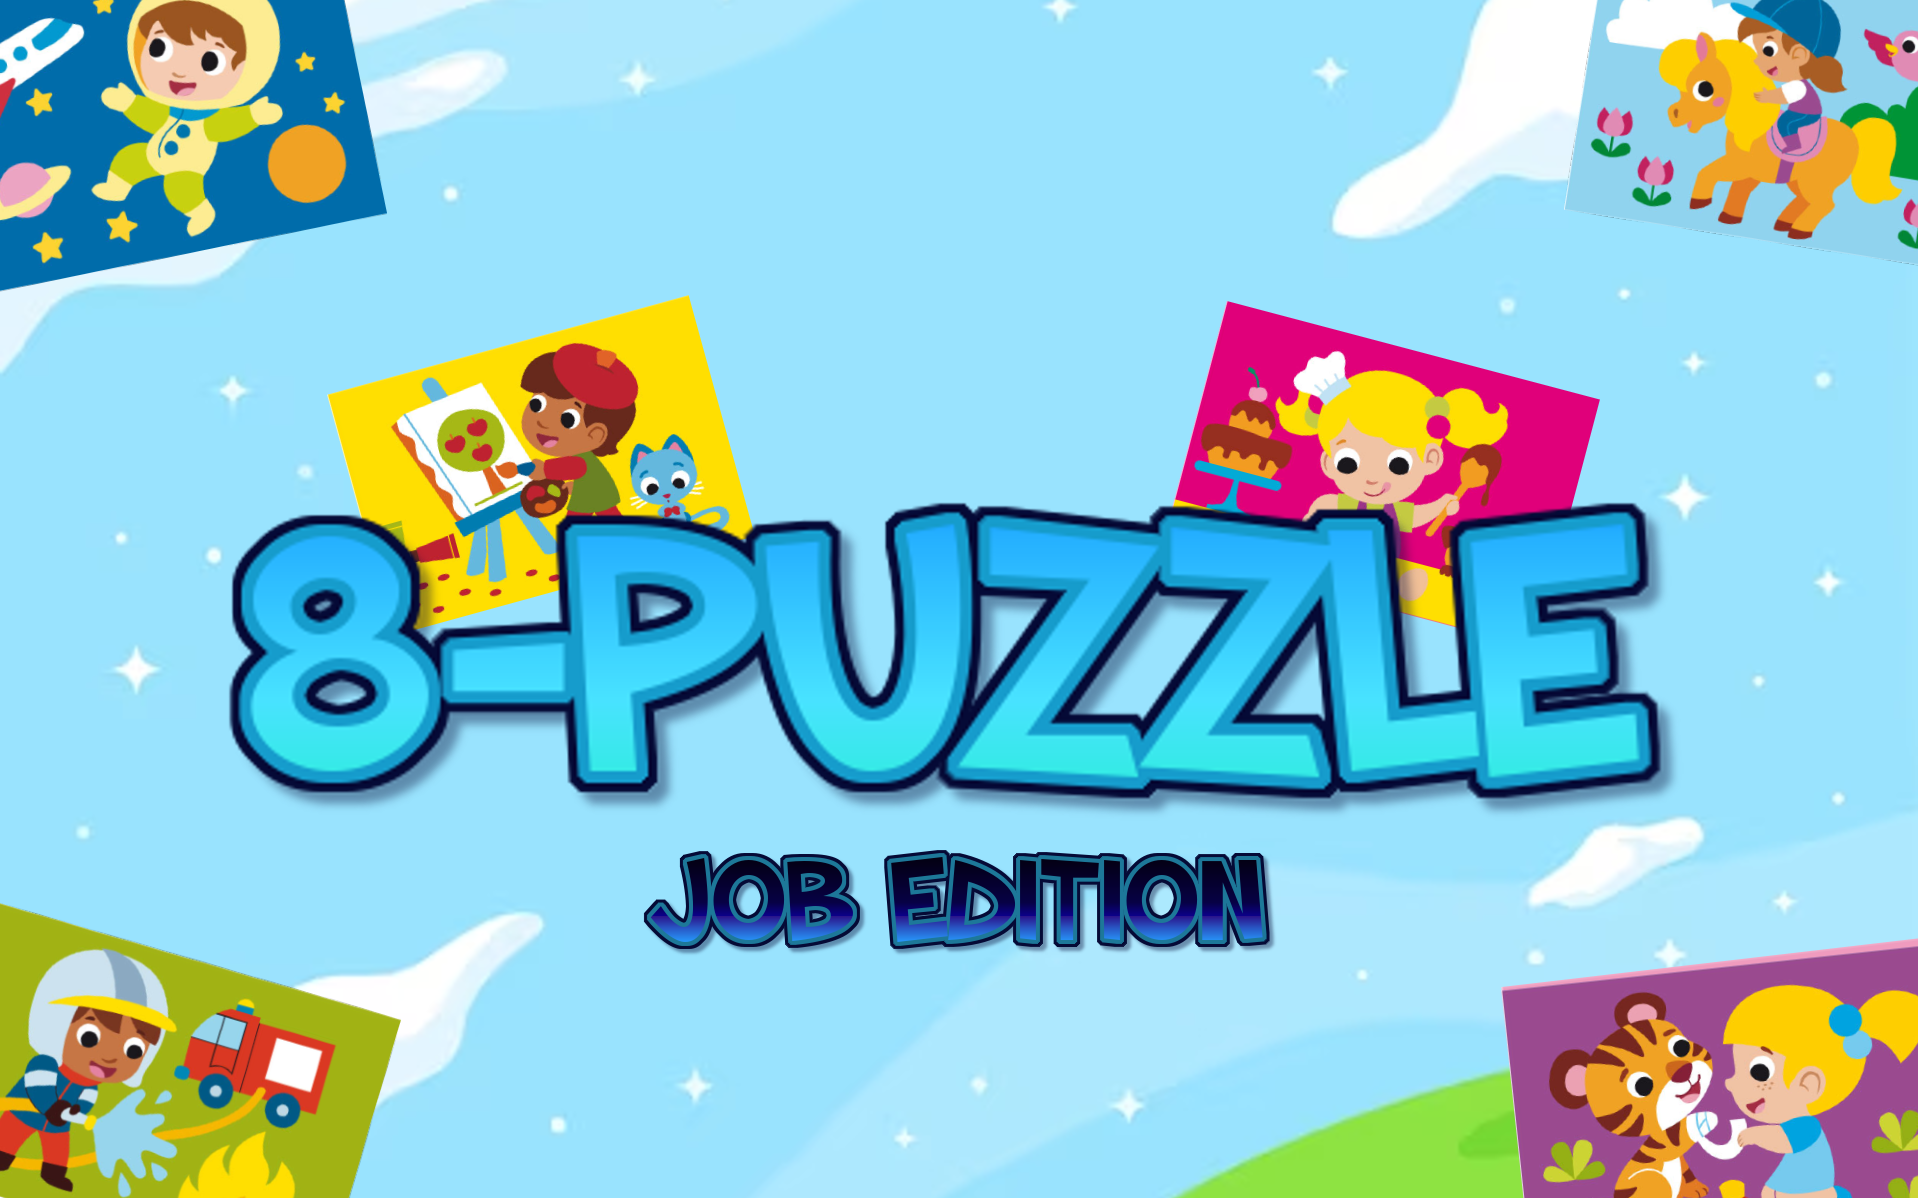 8-Puzzle Job Edition